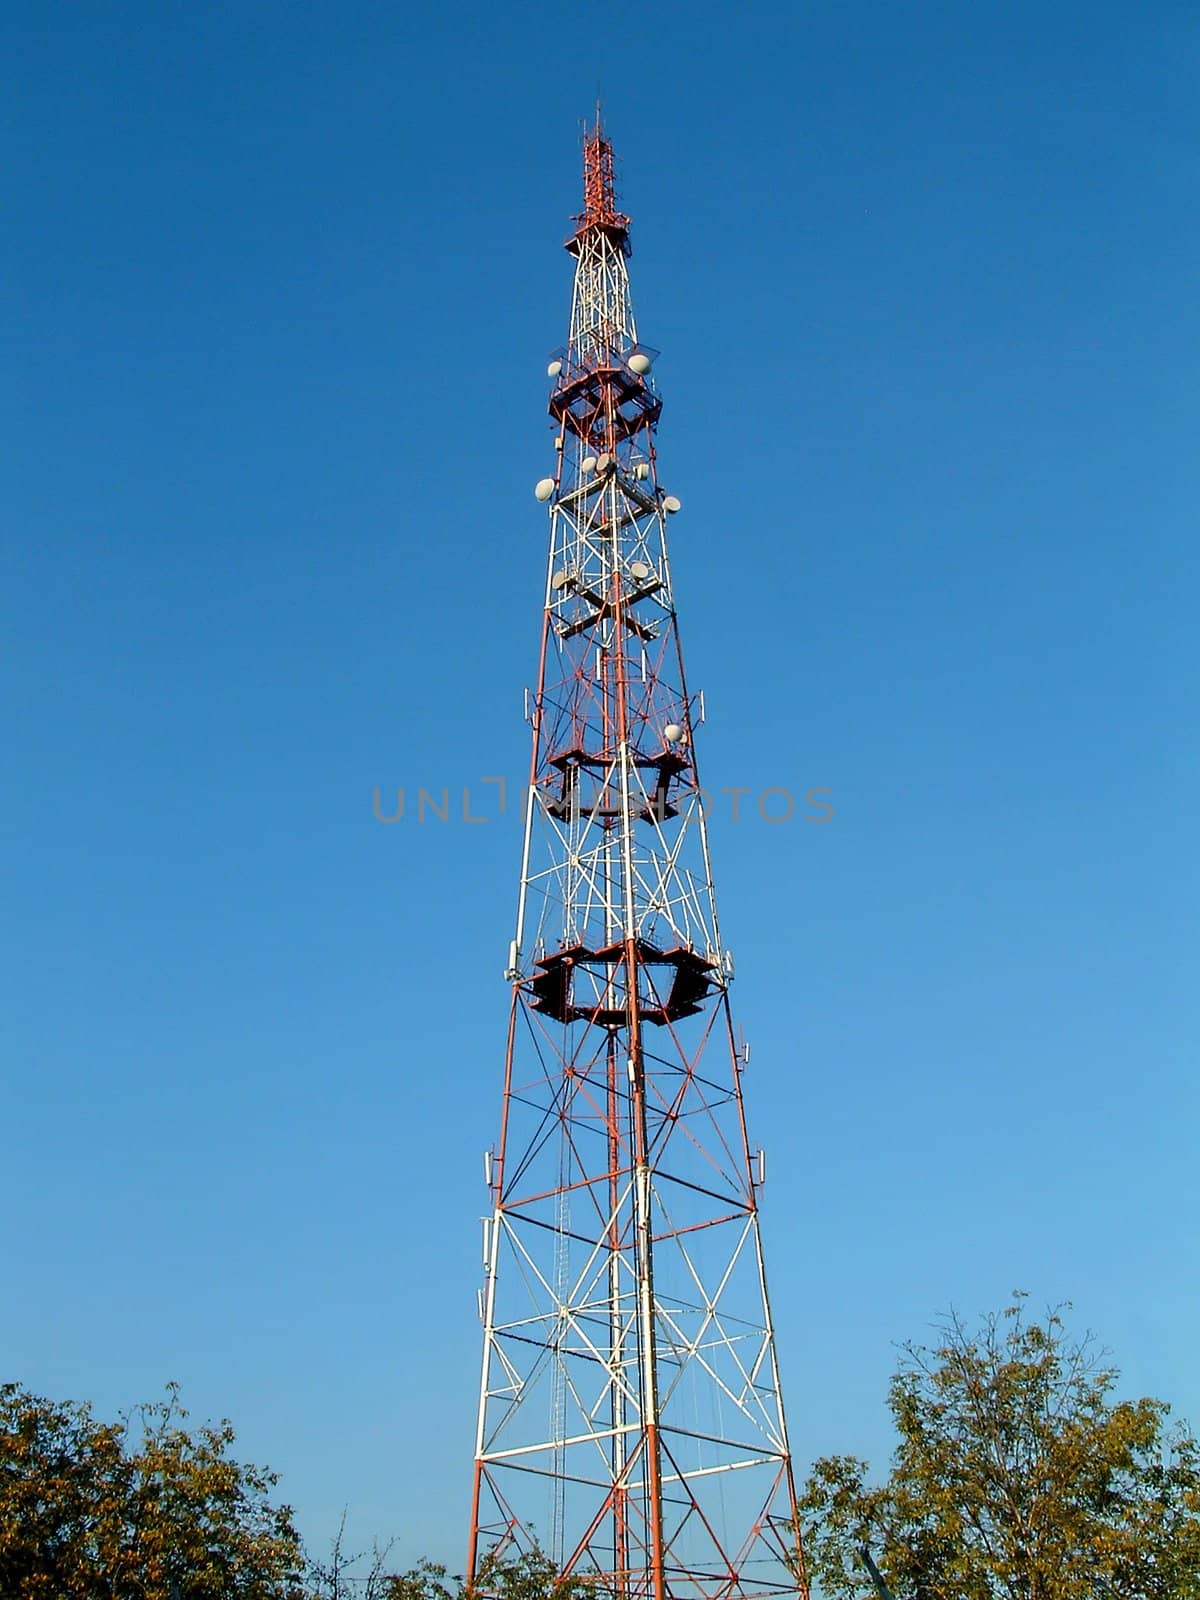 Radiotelevision tower by myyayko